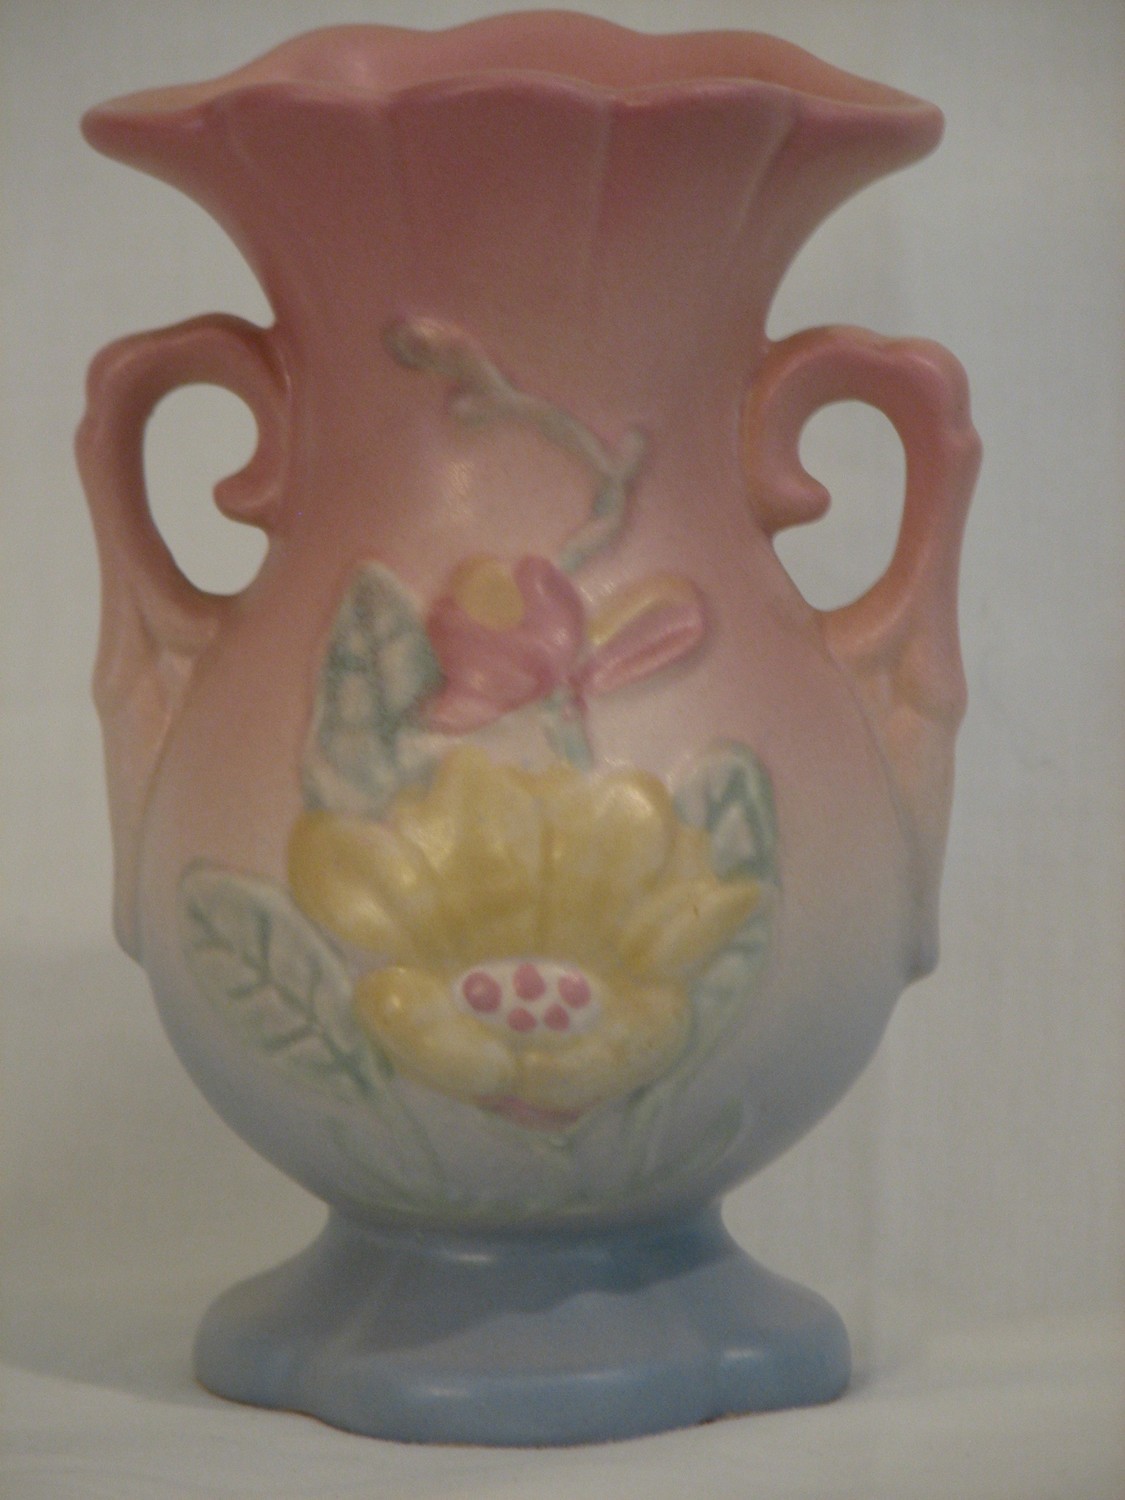 Hull Art Magnolia Matte Vase 13-4 3/4